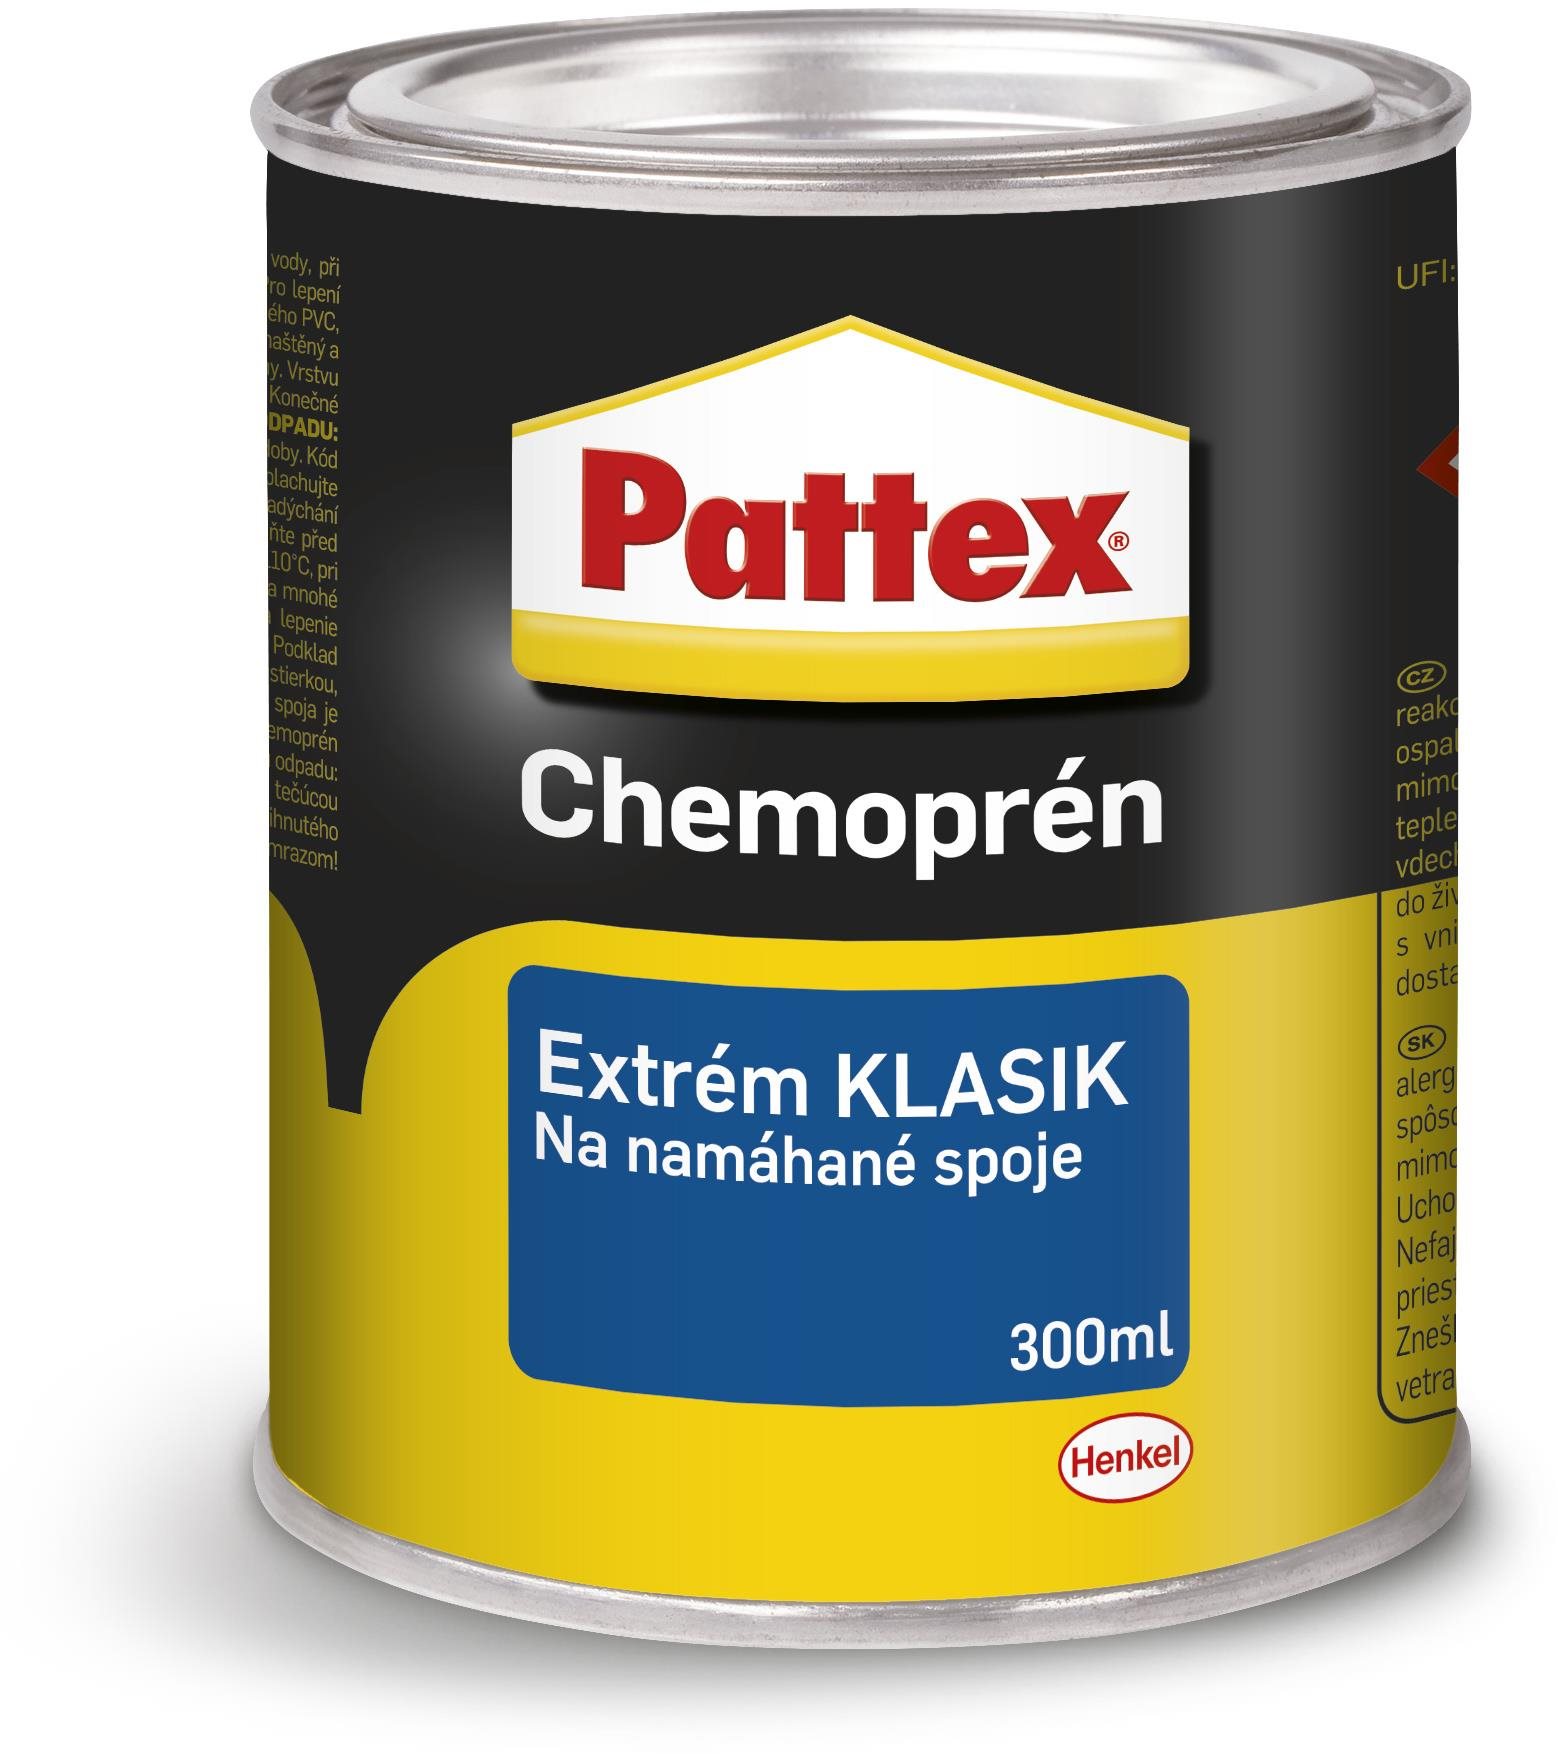 Ragasztó PATTEX Chemoprene Extreme CLASSIC